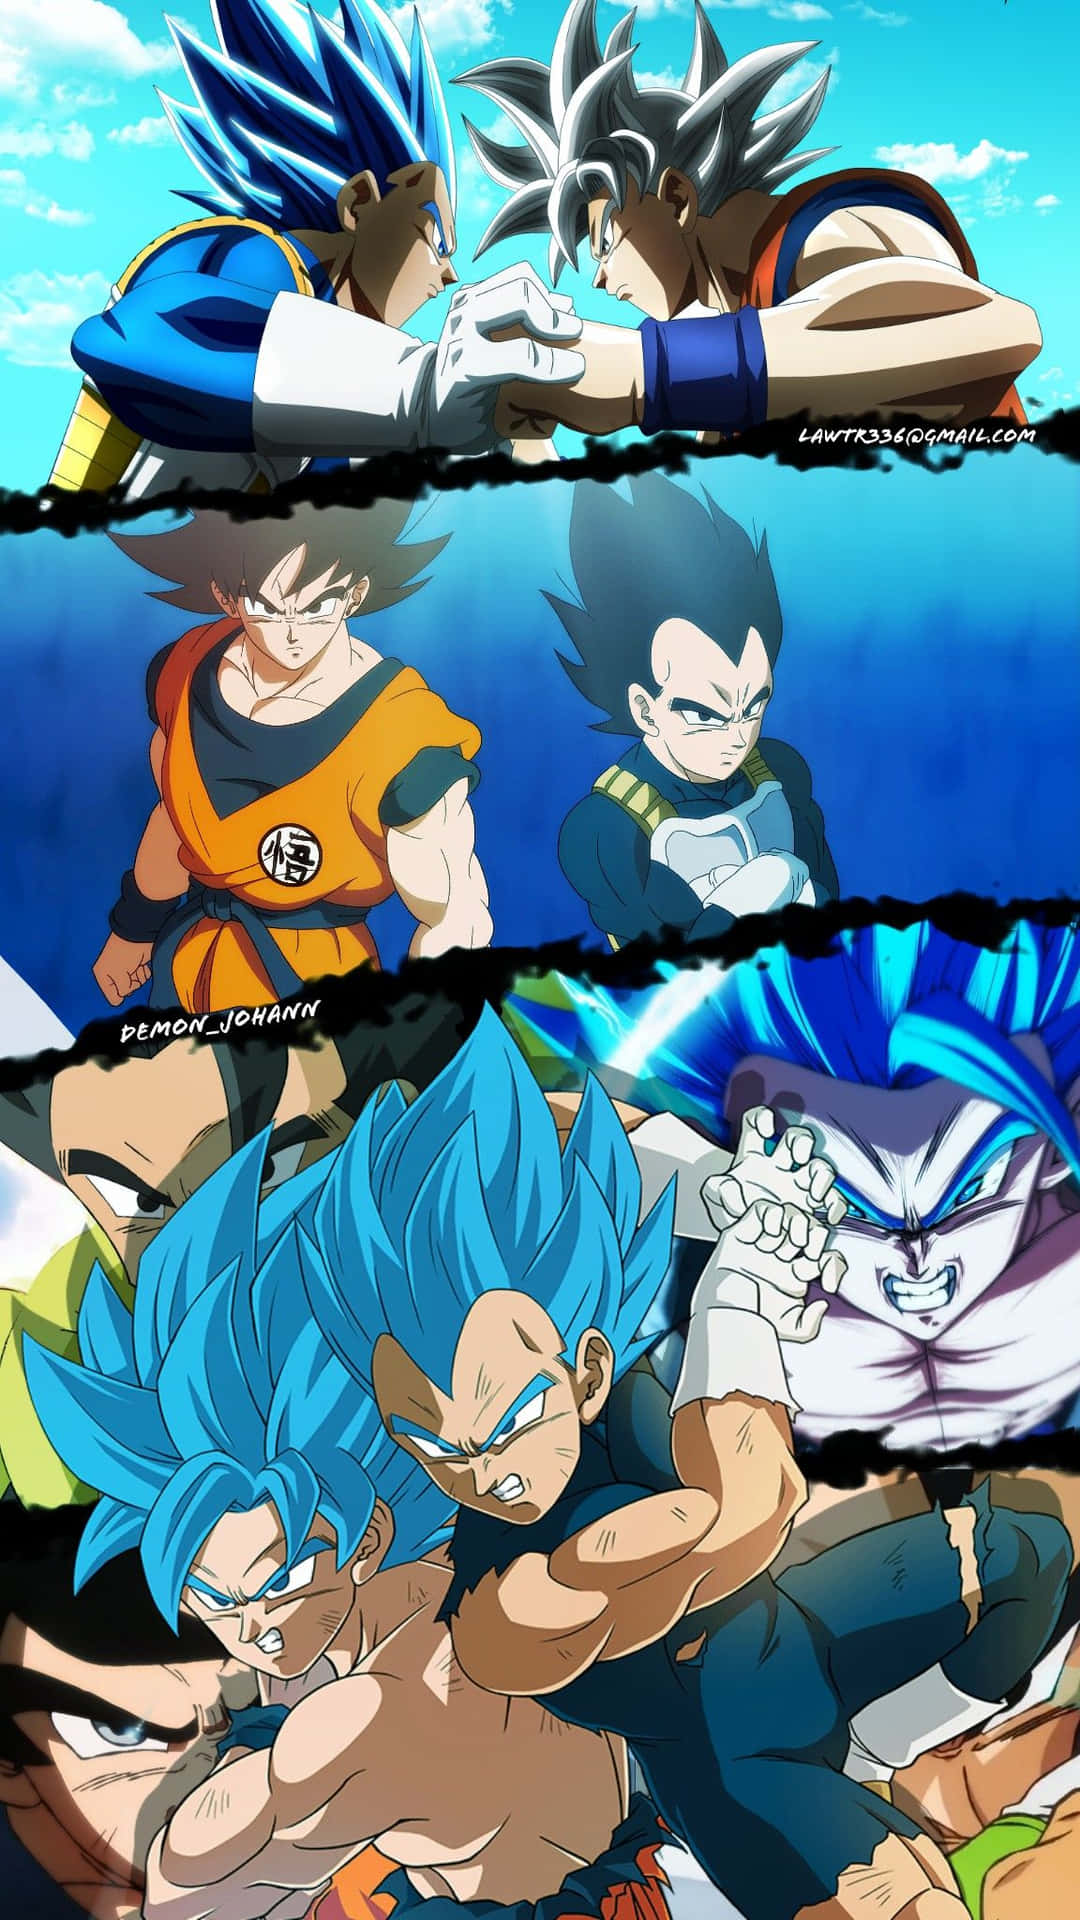 Enjoy Watching An Epic Battle Between Goku and Vegeta with this Goku And Vegeta Iphone Wallpaper Wallpaper